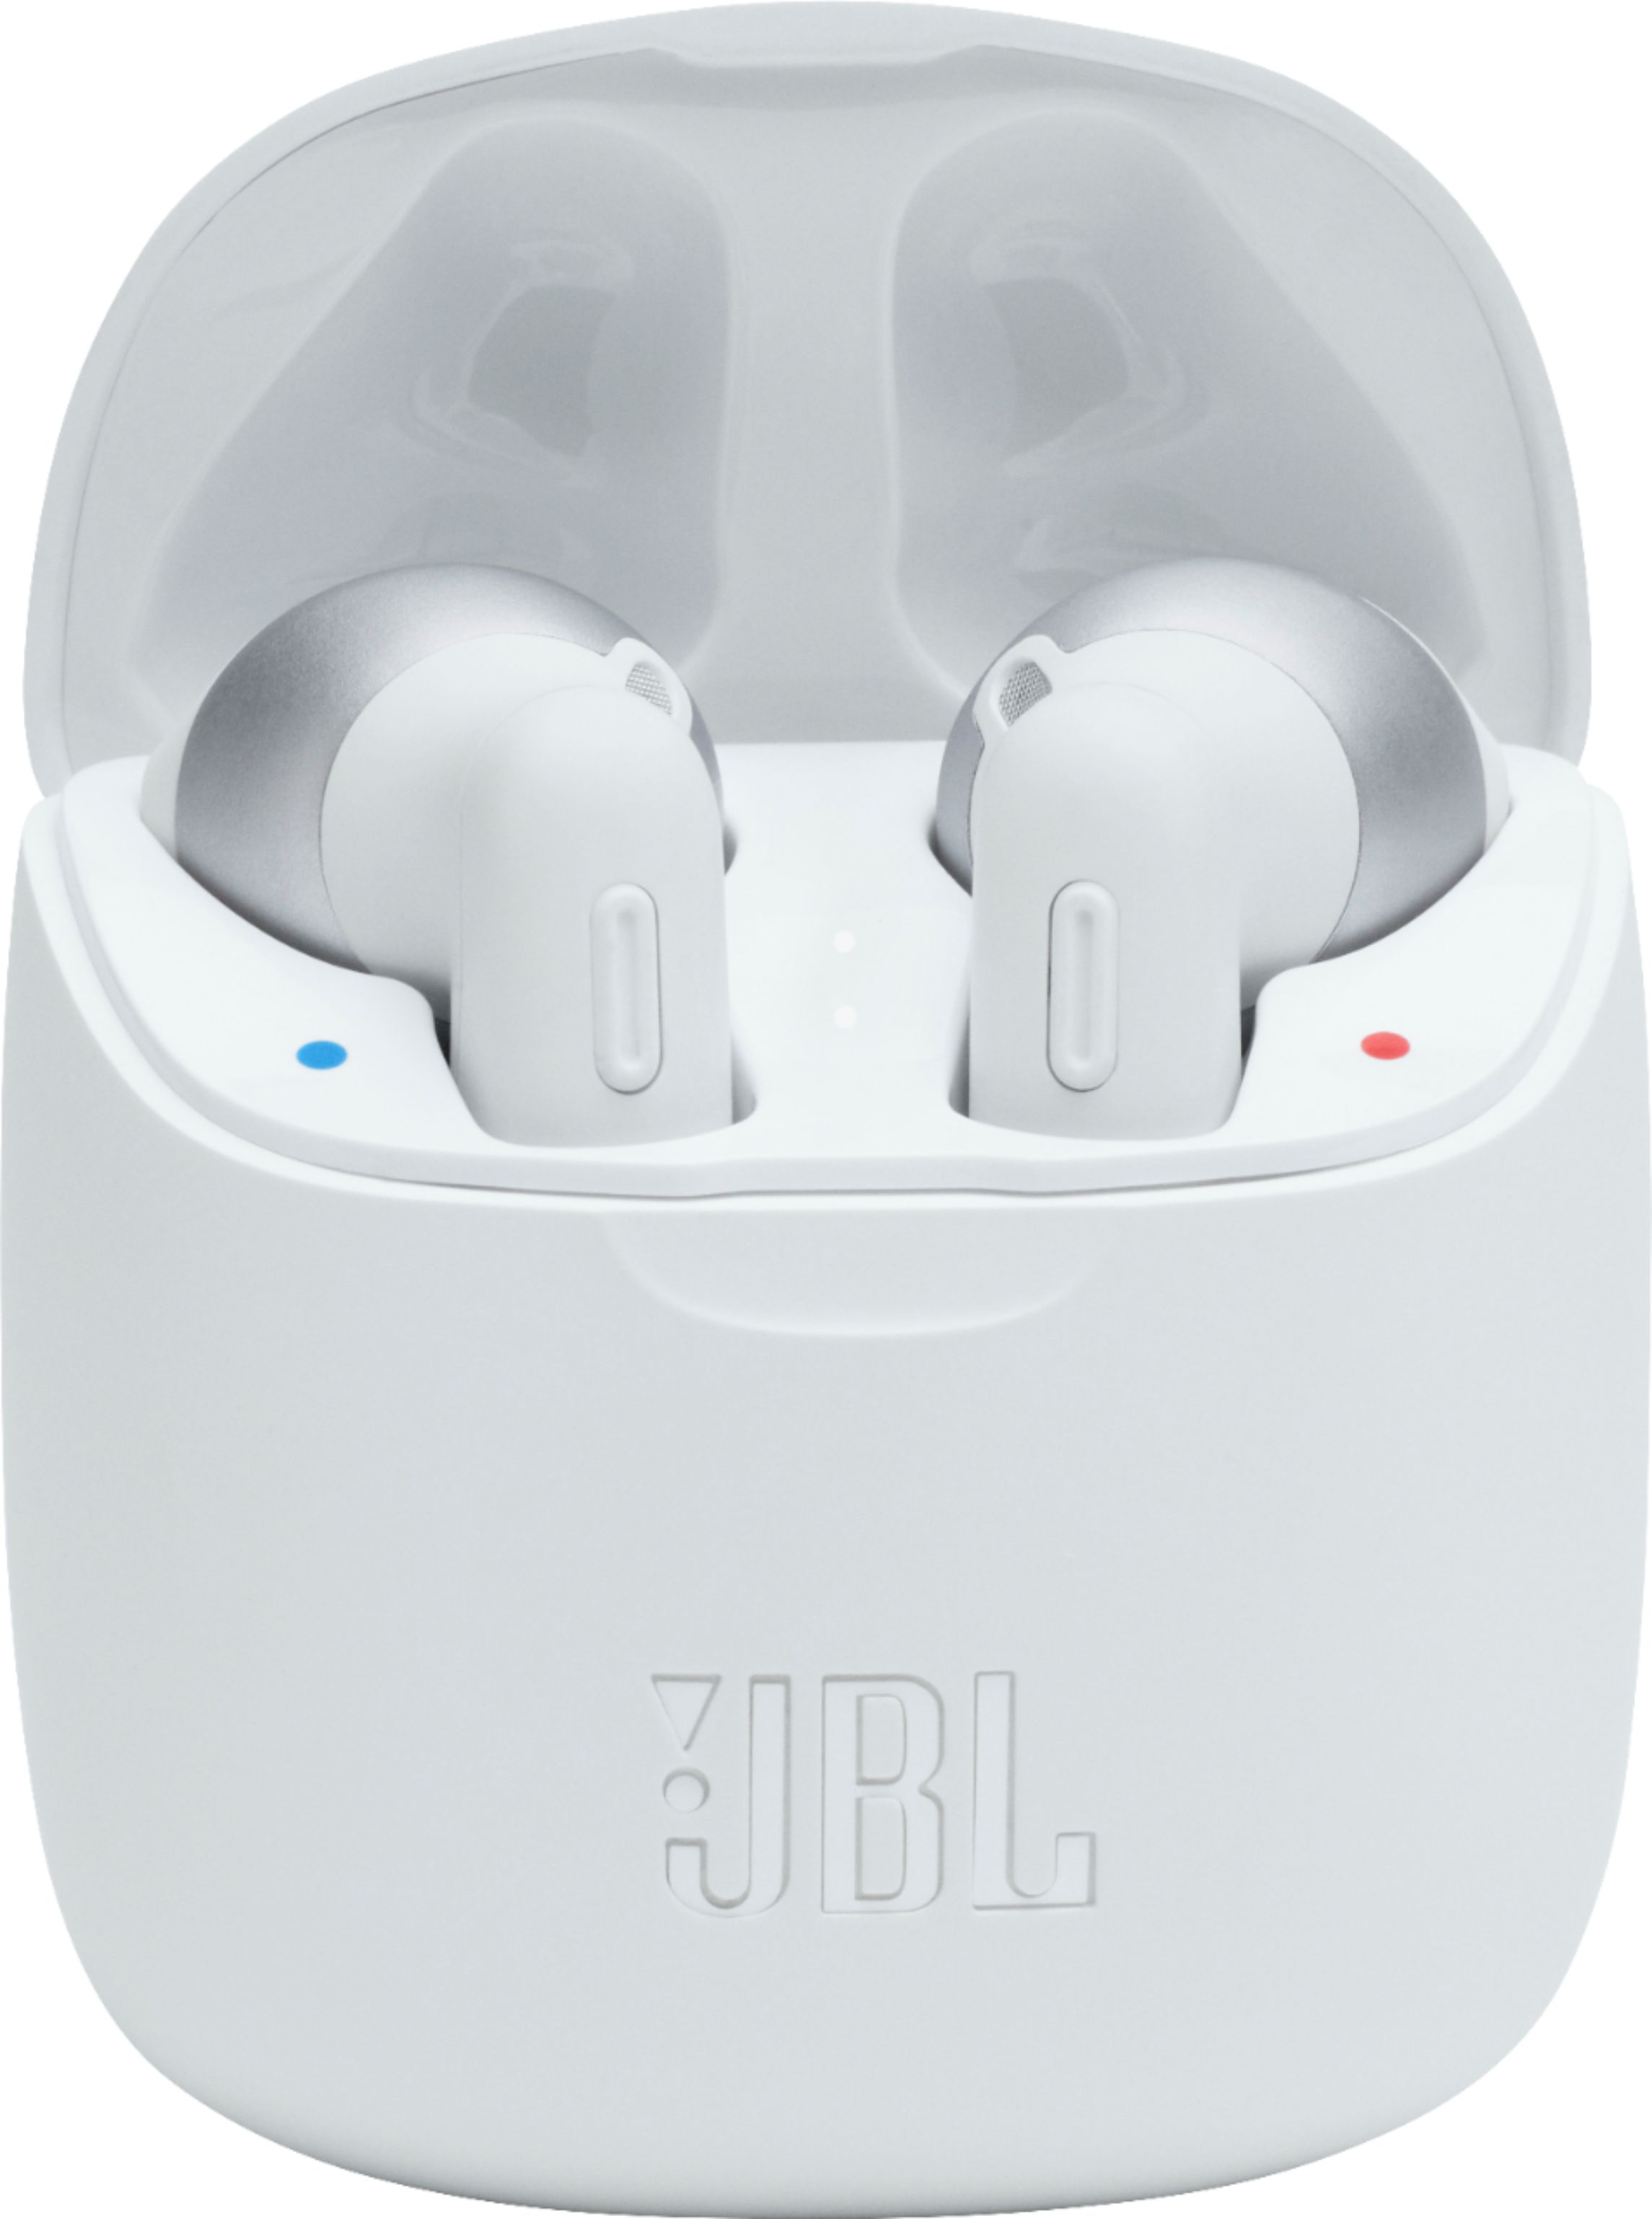 Angle View: JBL - Tune 225TWS True Wireless In-Ear Headphones - White